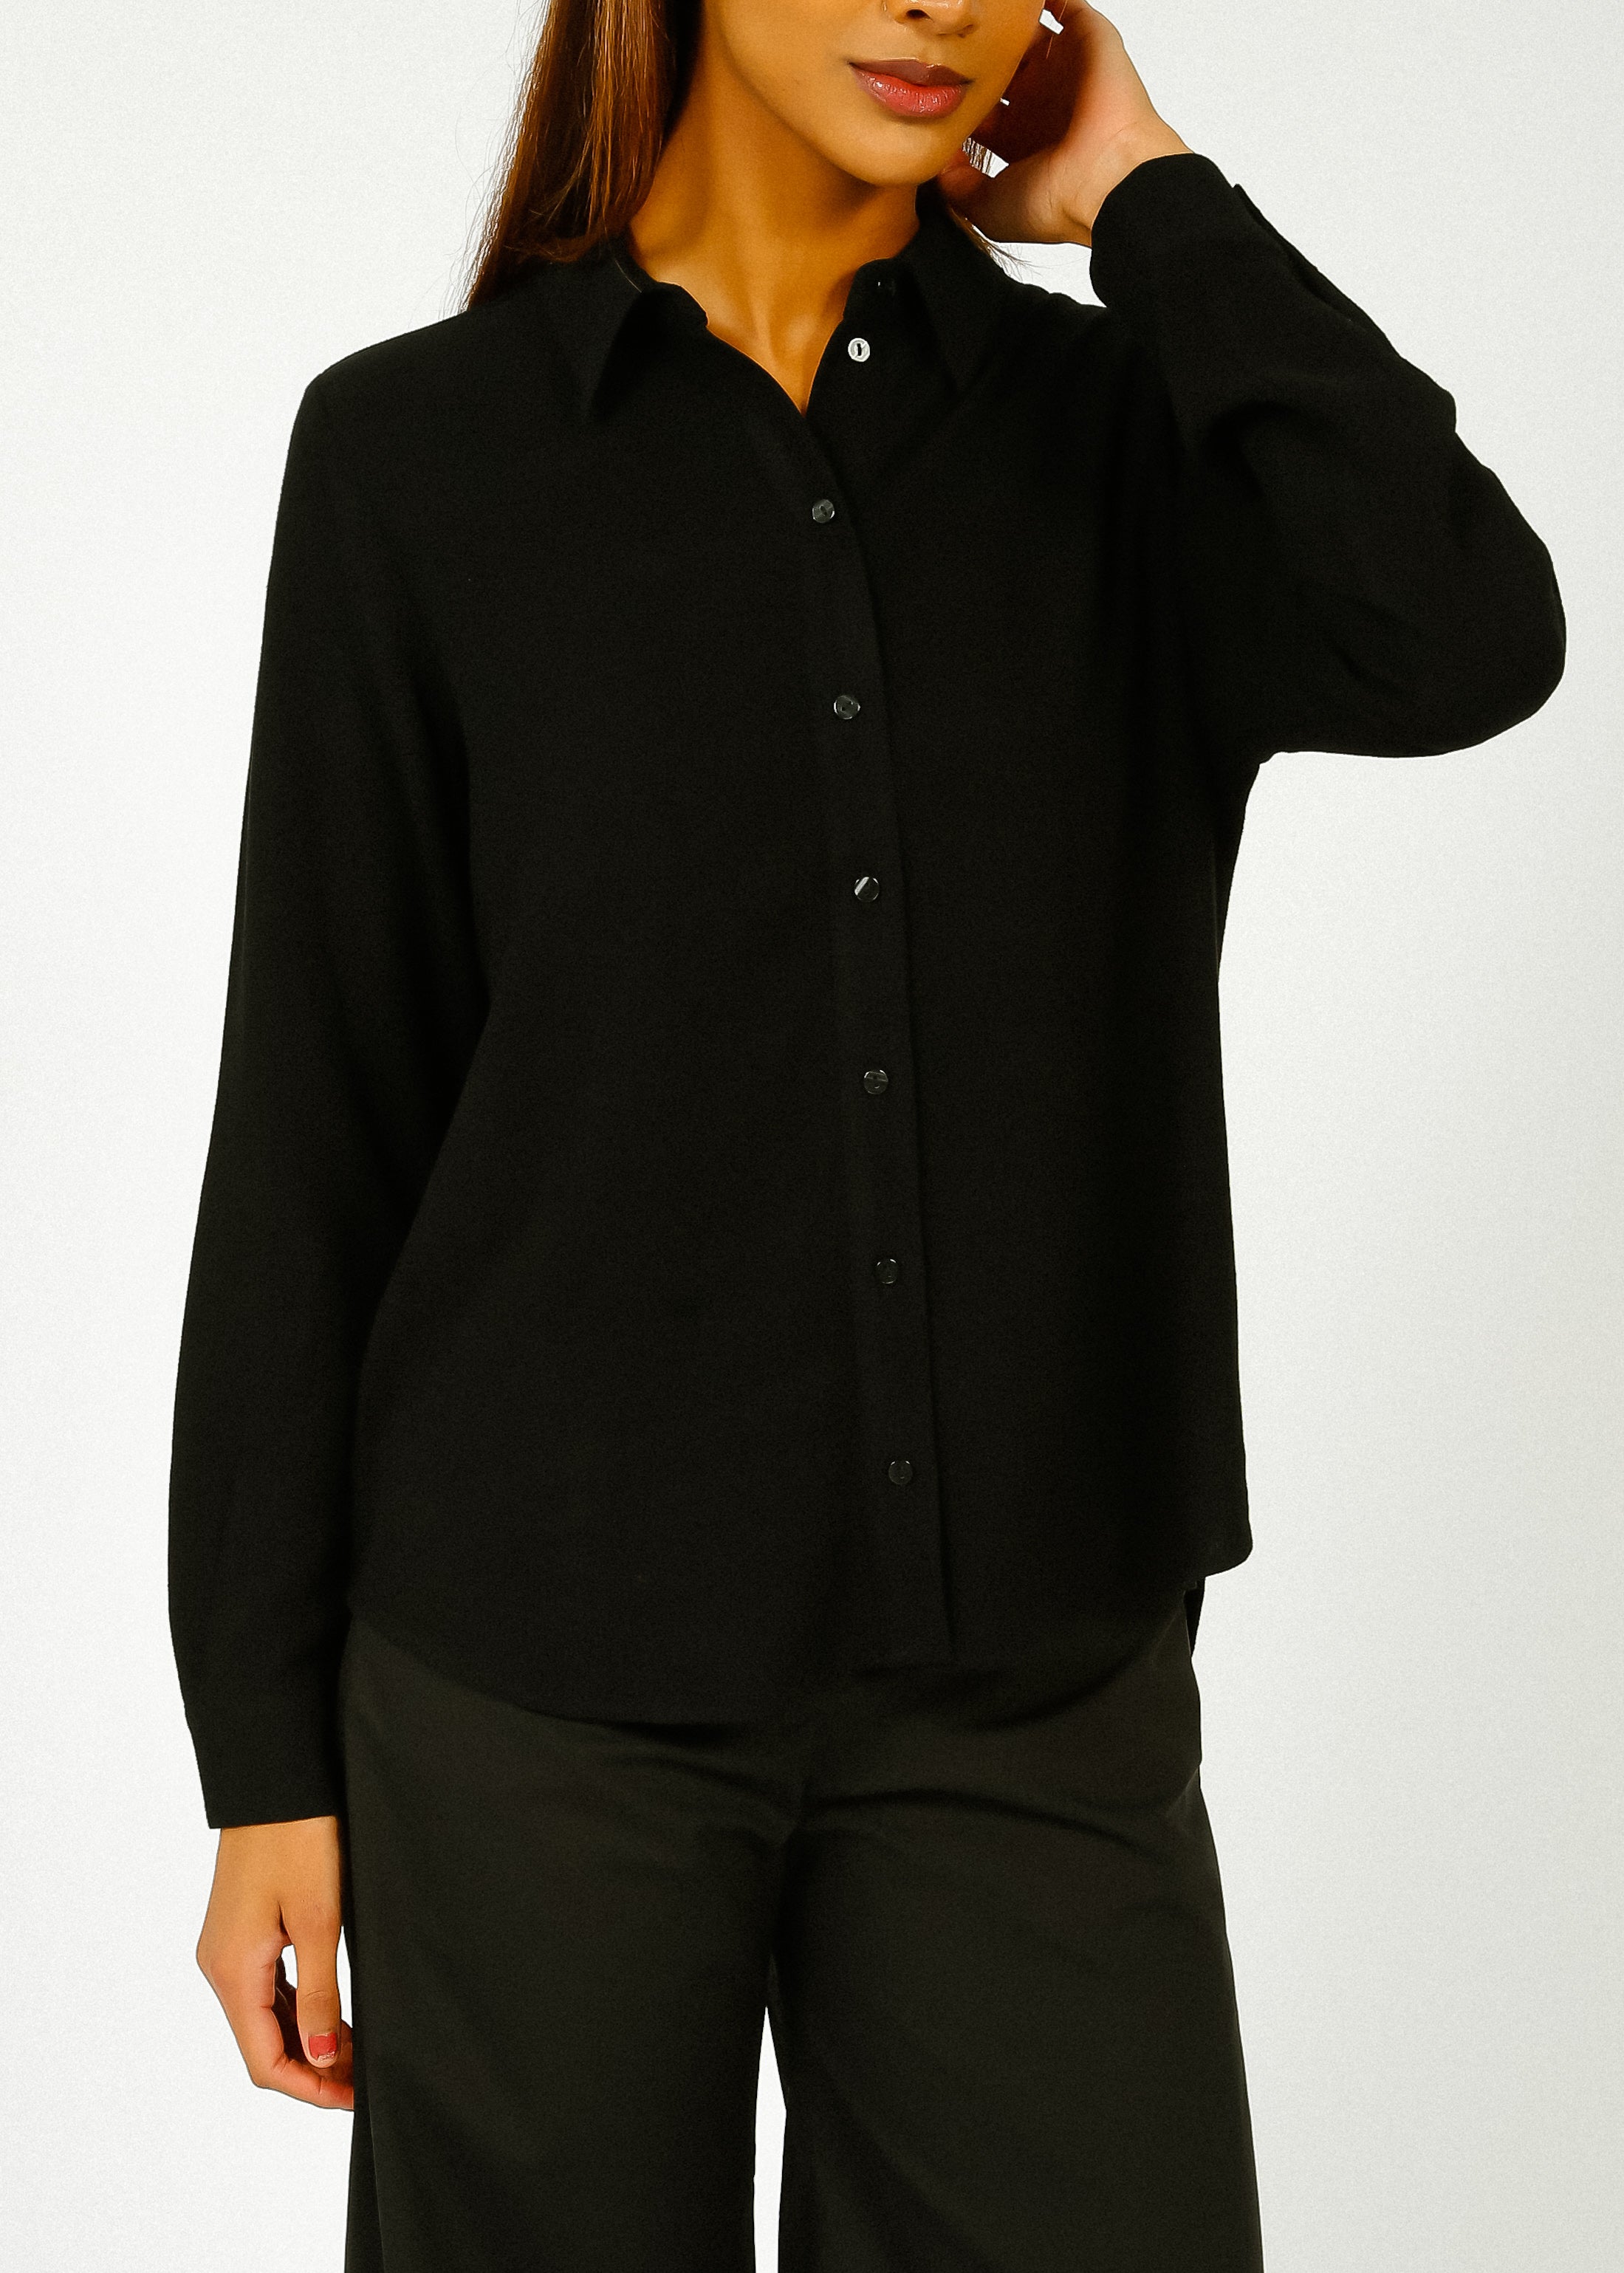 SLF Viva LS Shirt in Black